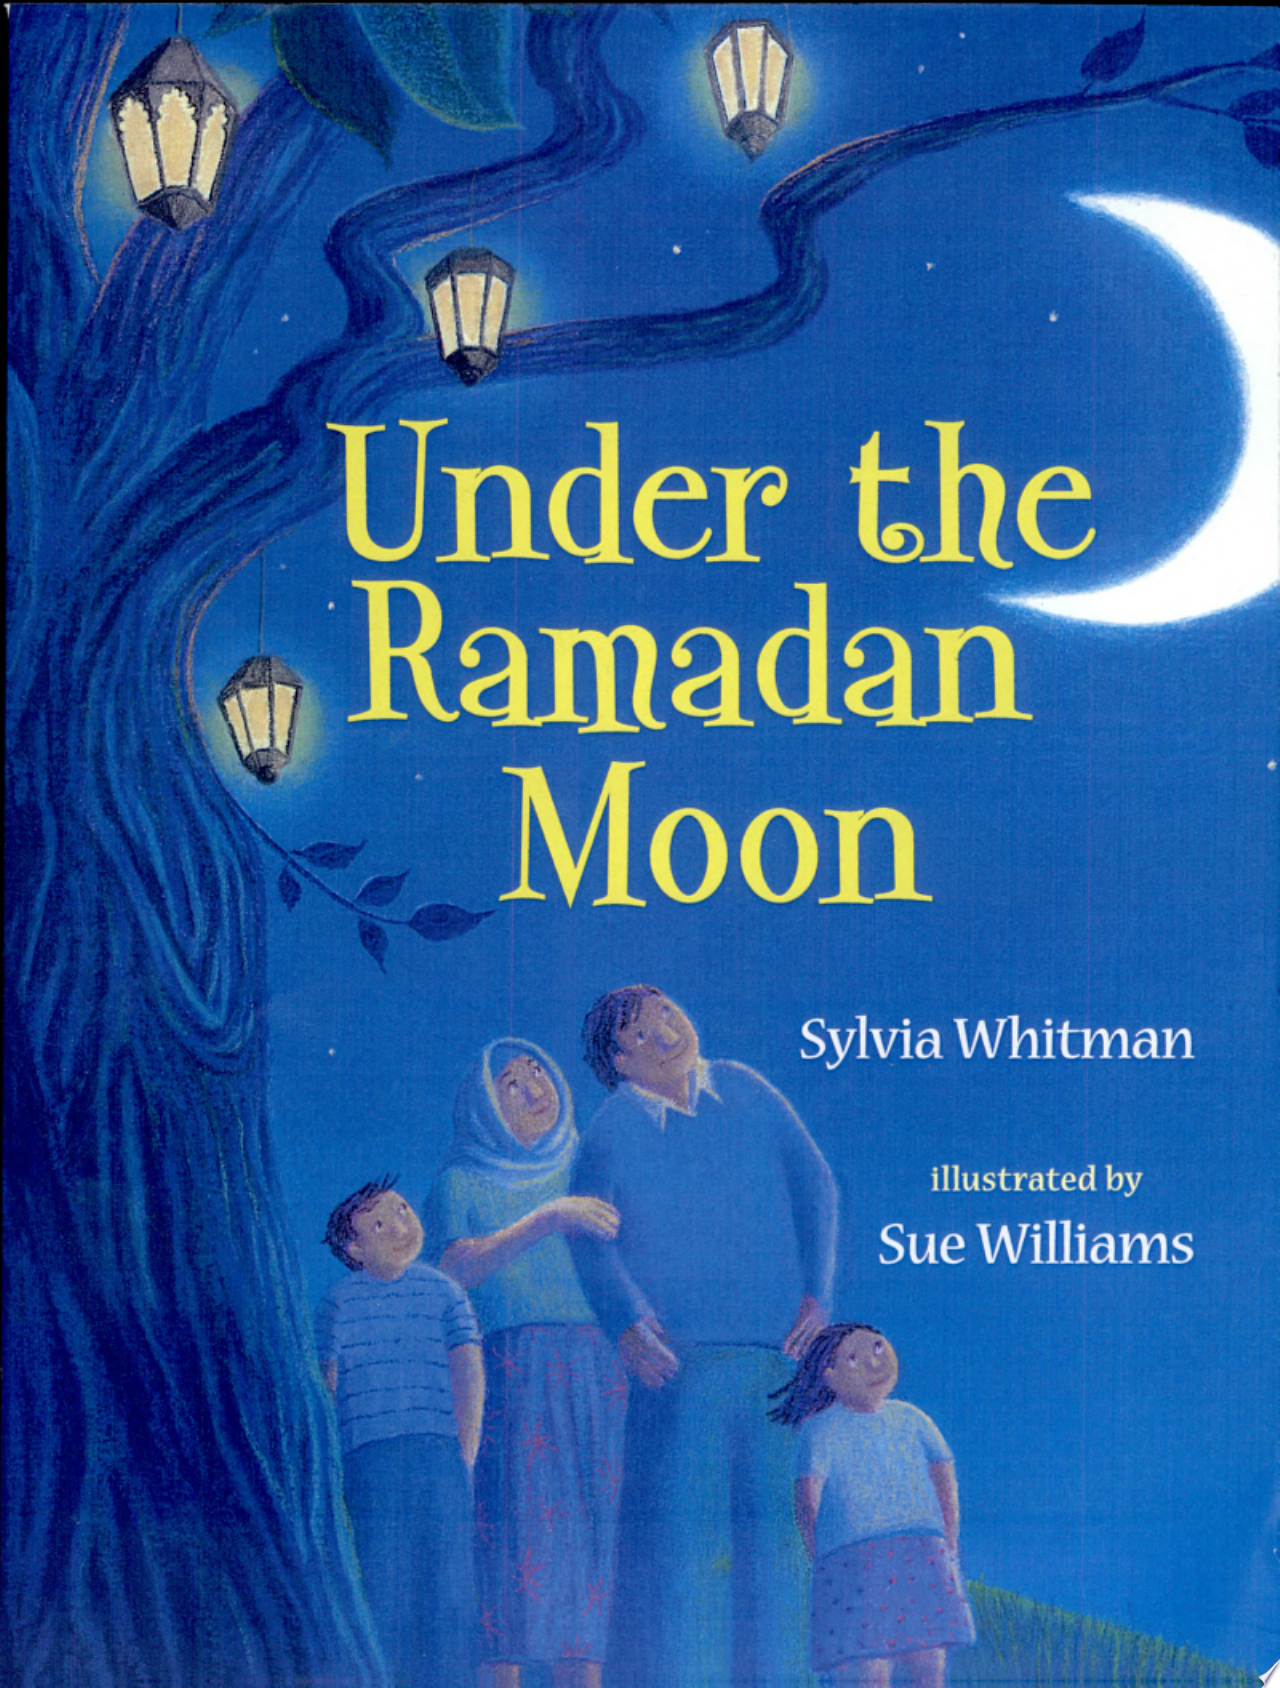 Image for "Under the Ramadan Moon"